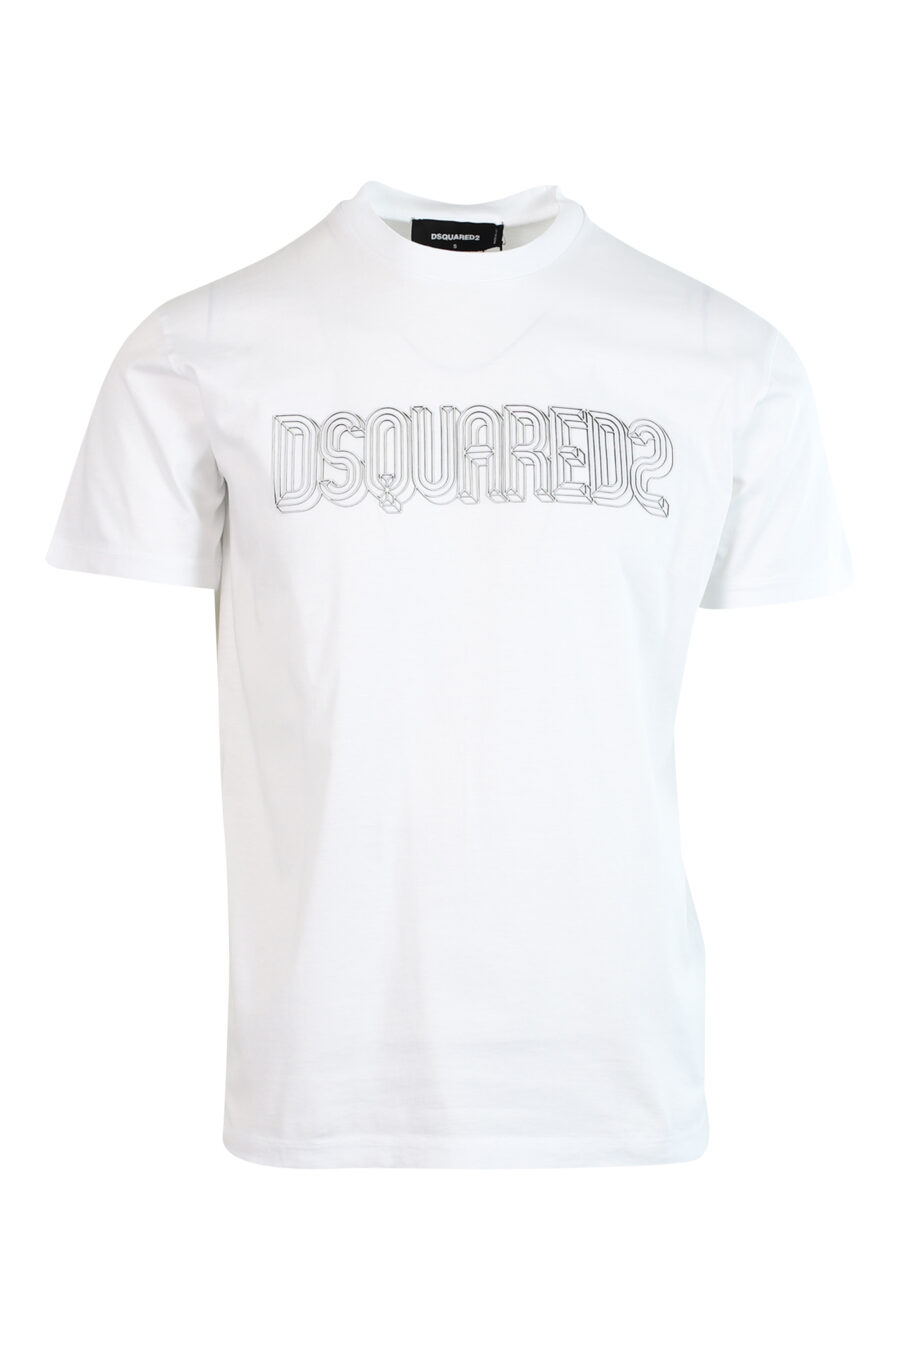 White T-shirt with monochrome logo - 8052134946381